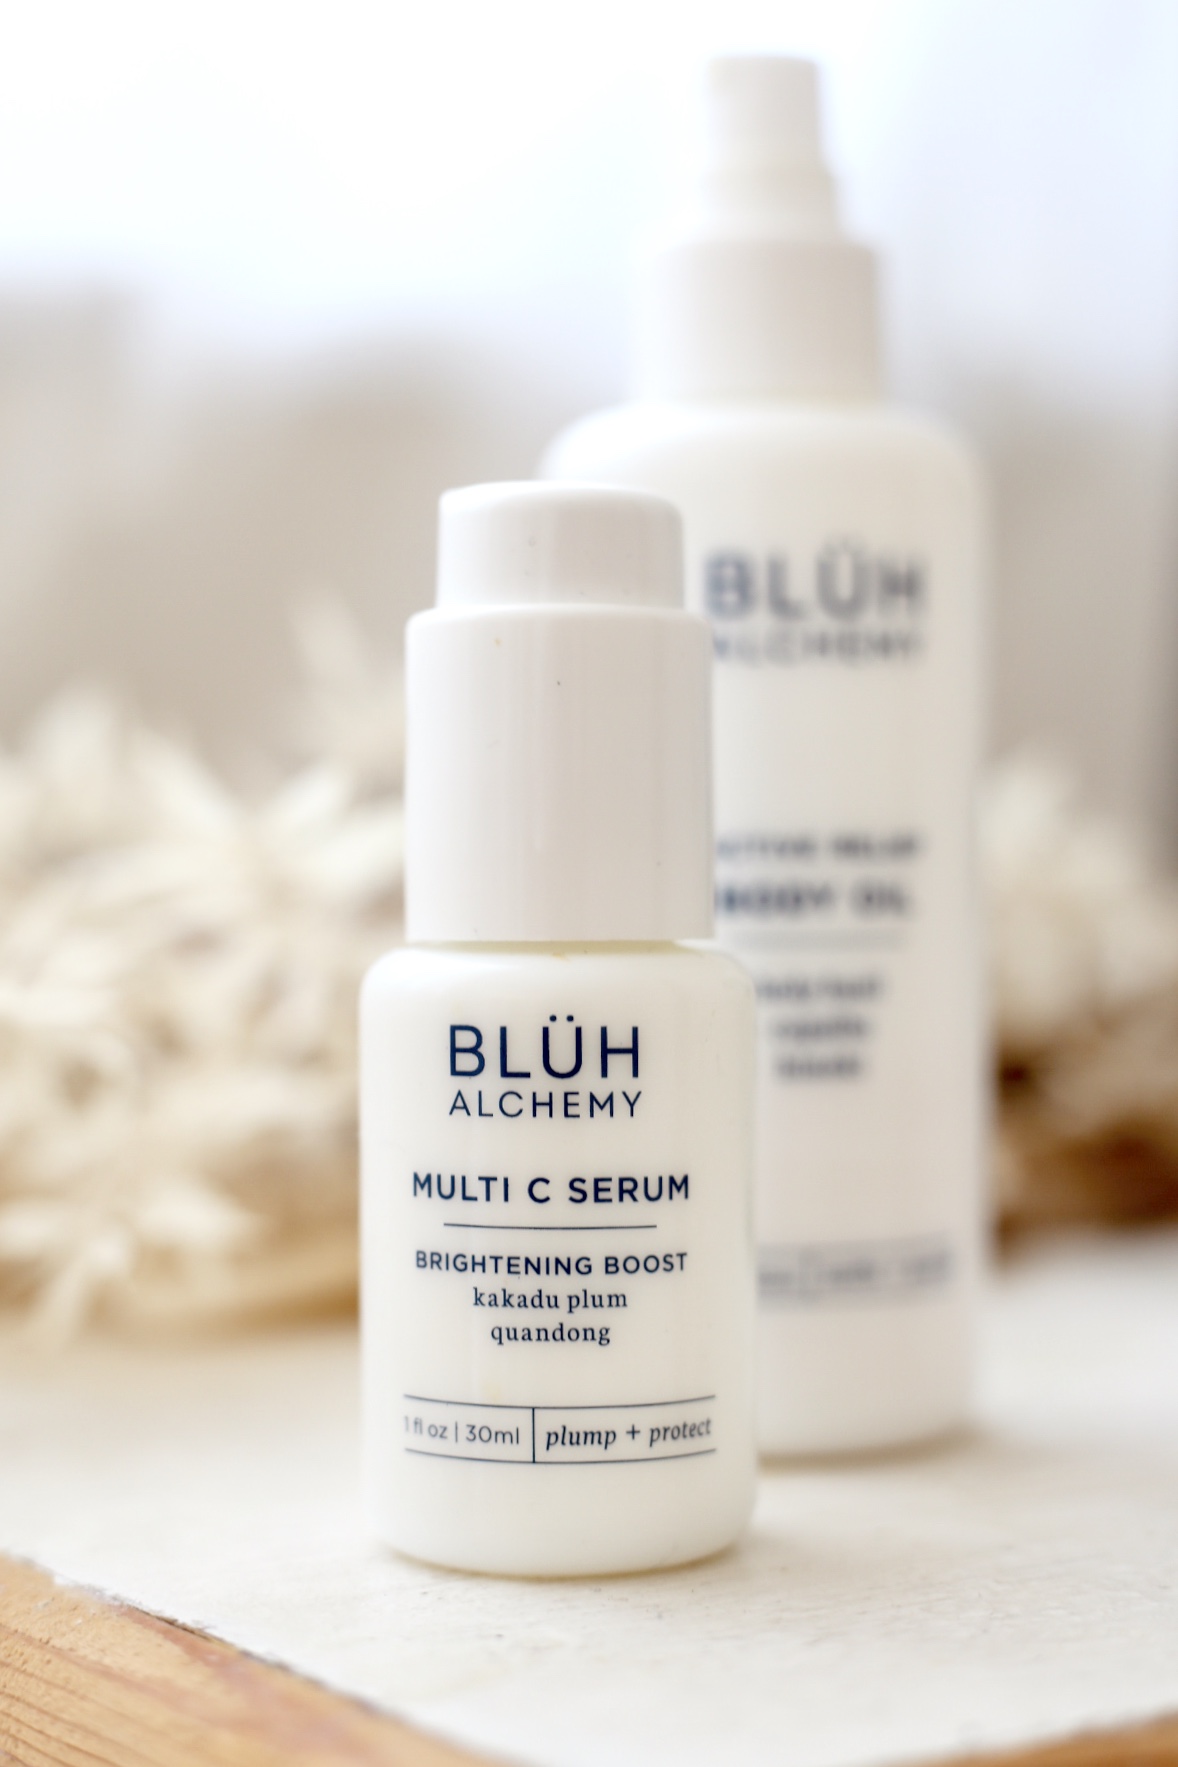 Bluh alchemy multi c serum